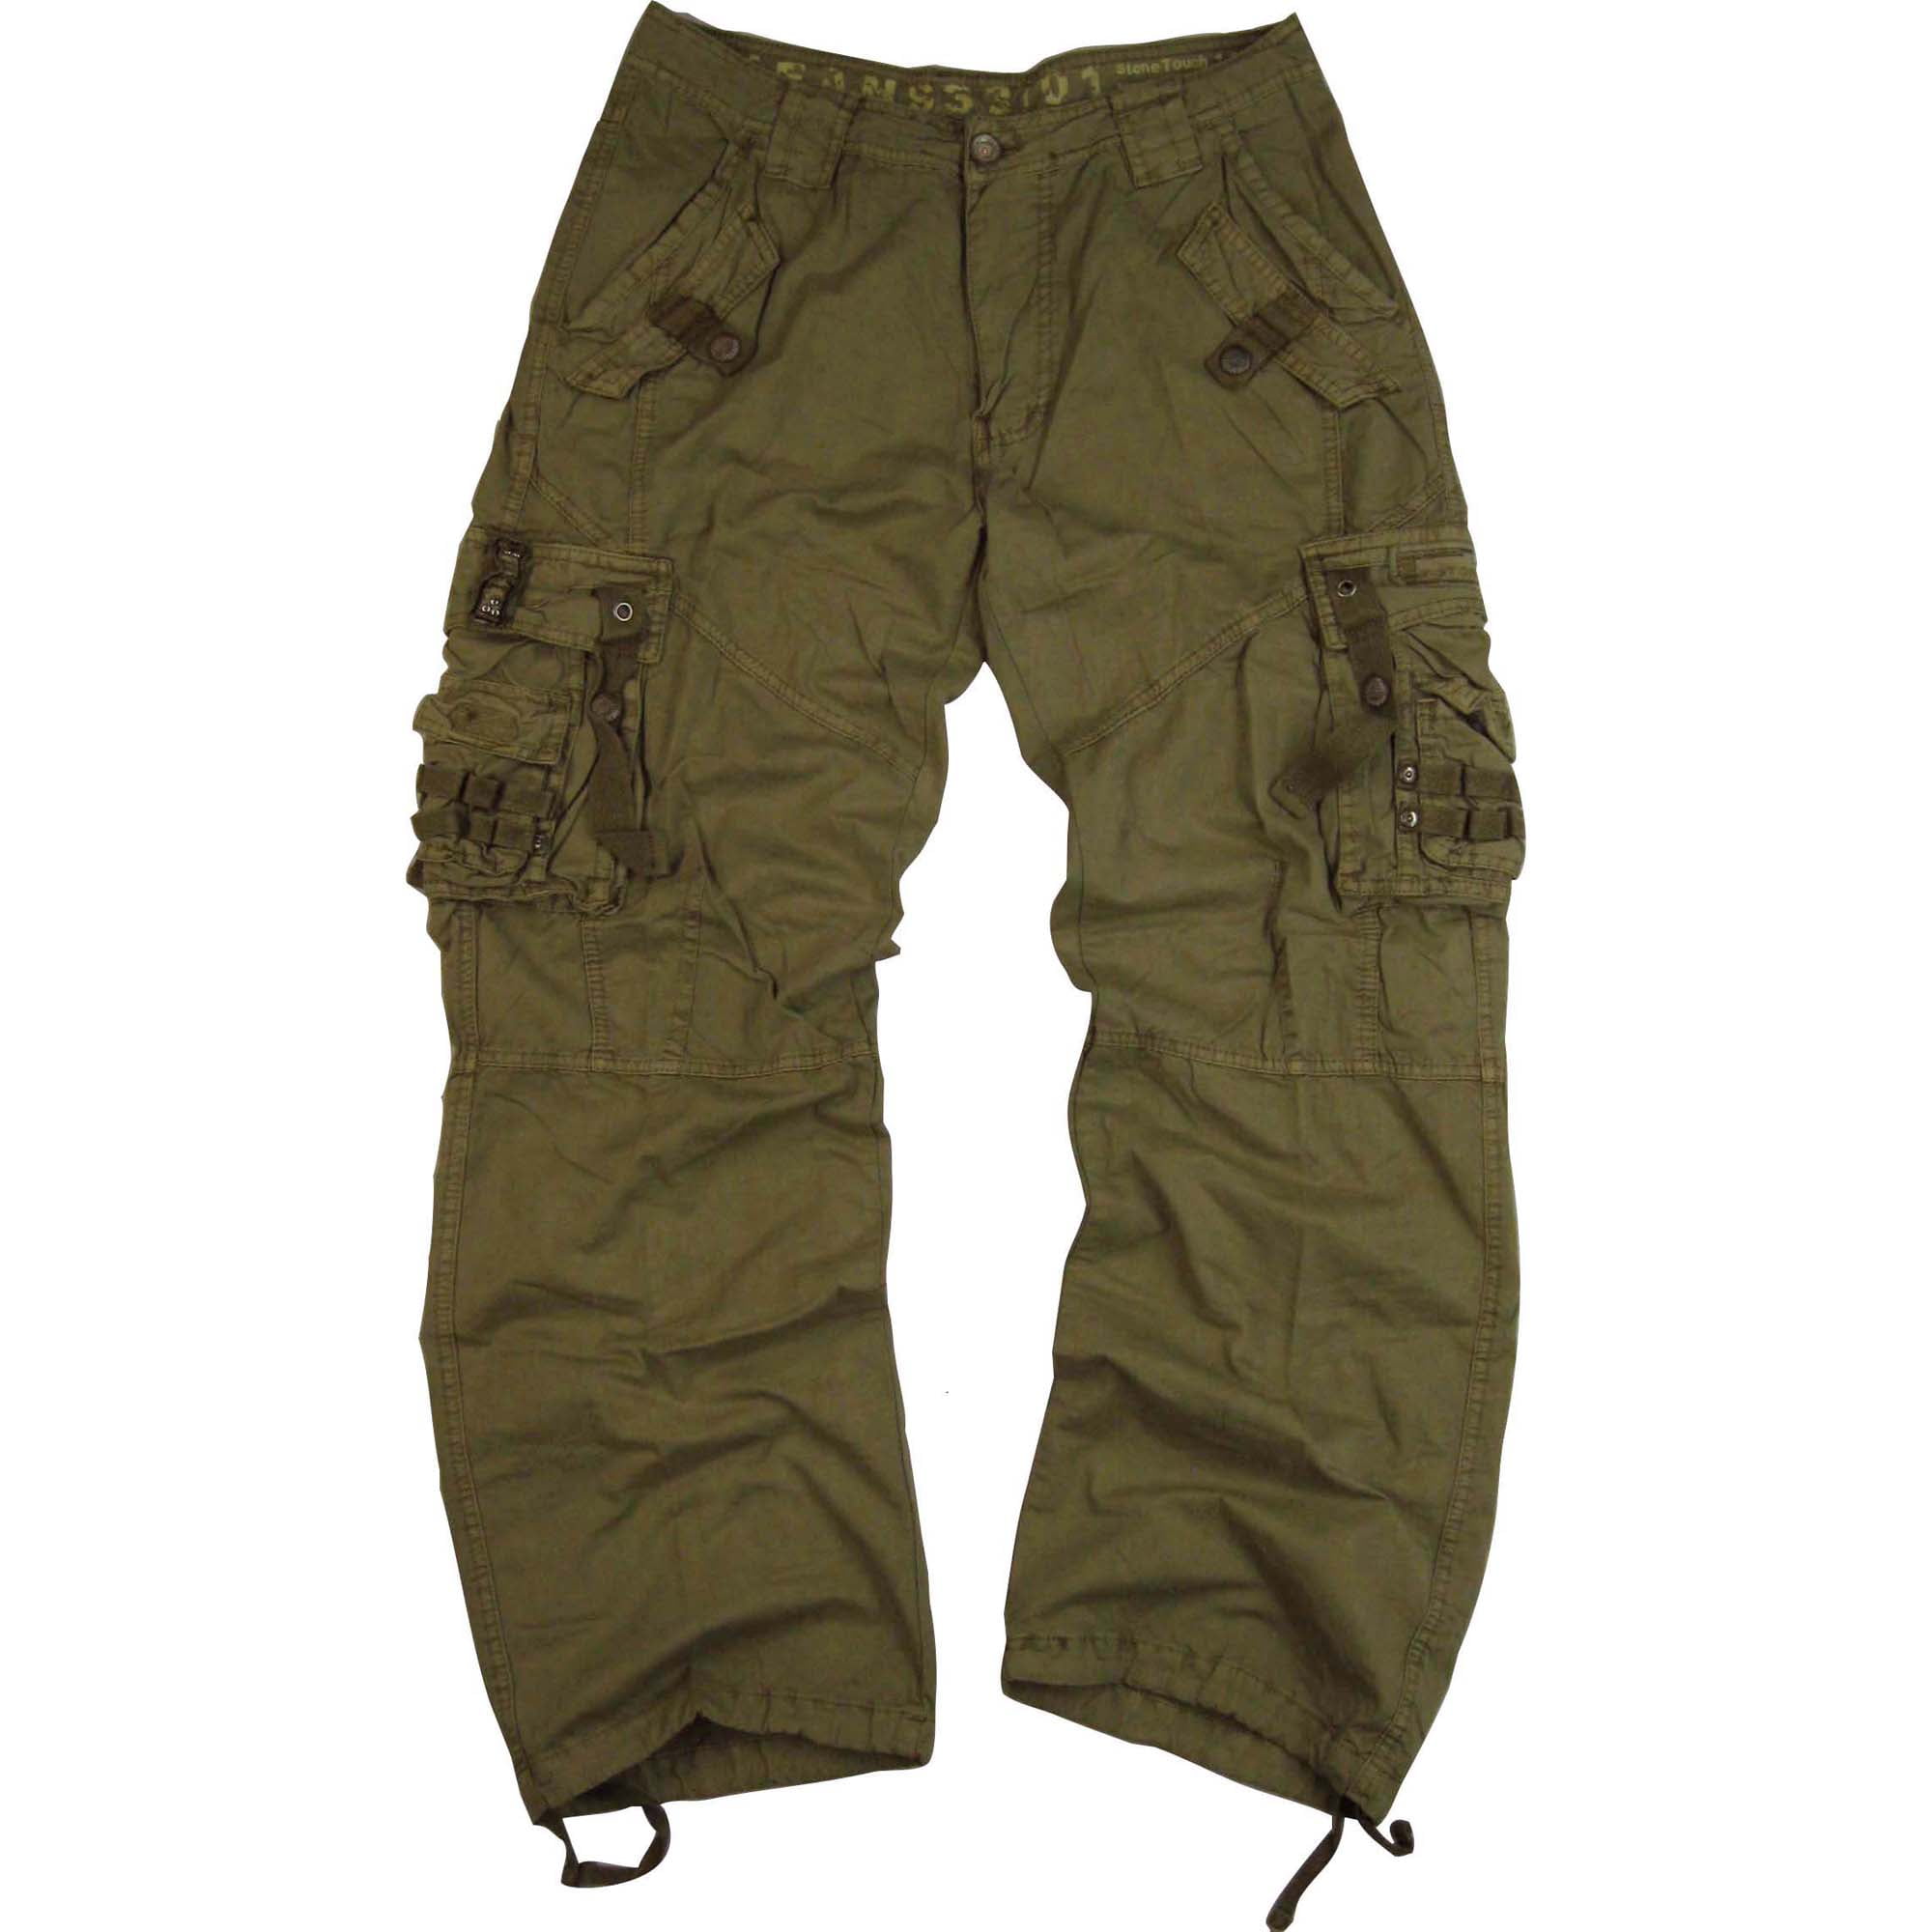 Men's Military Cargo Pants 36x32 Khaki #12211 - Walmart.com